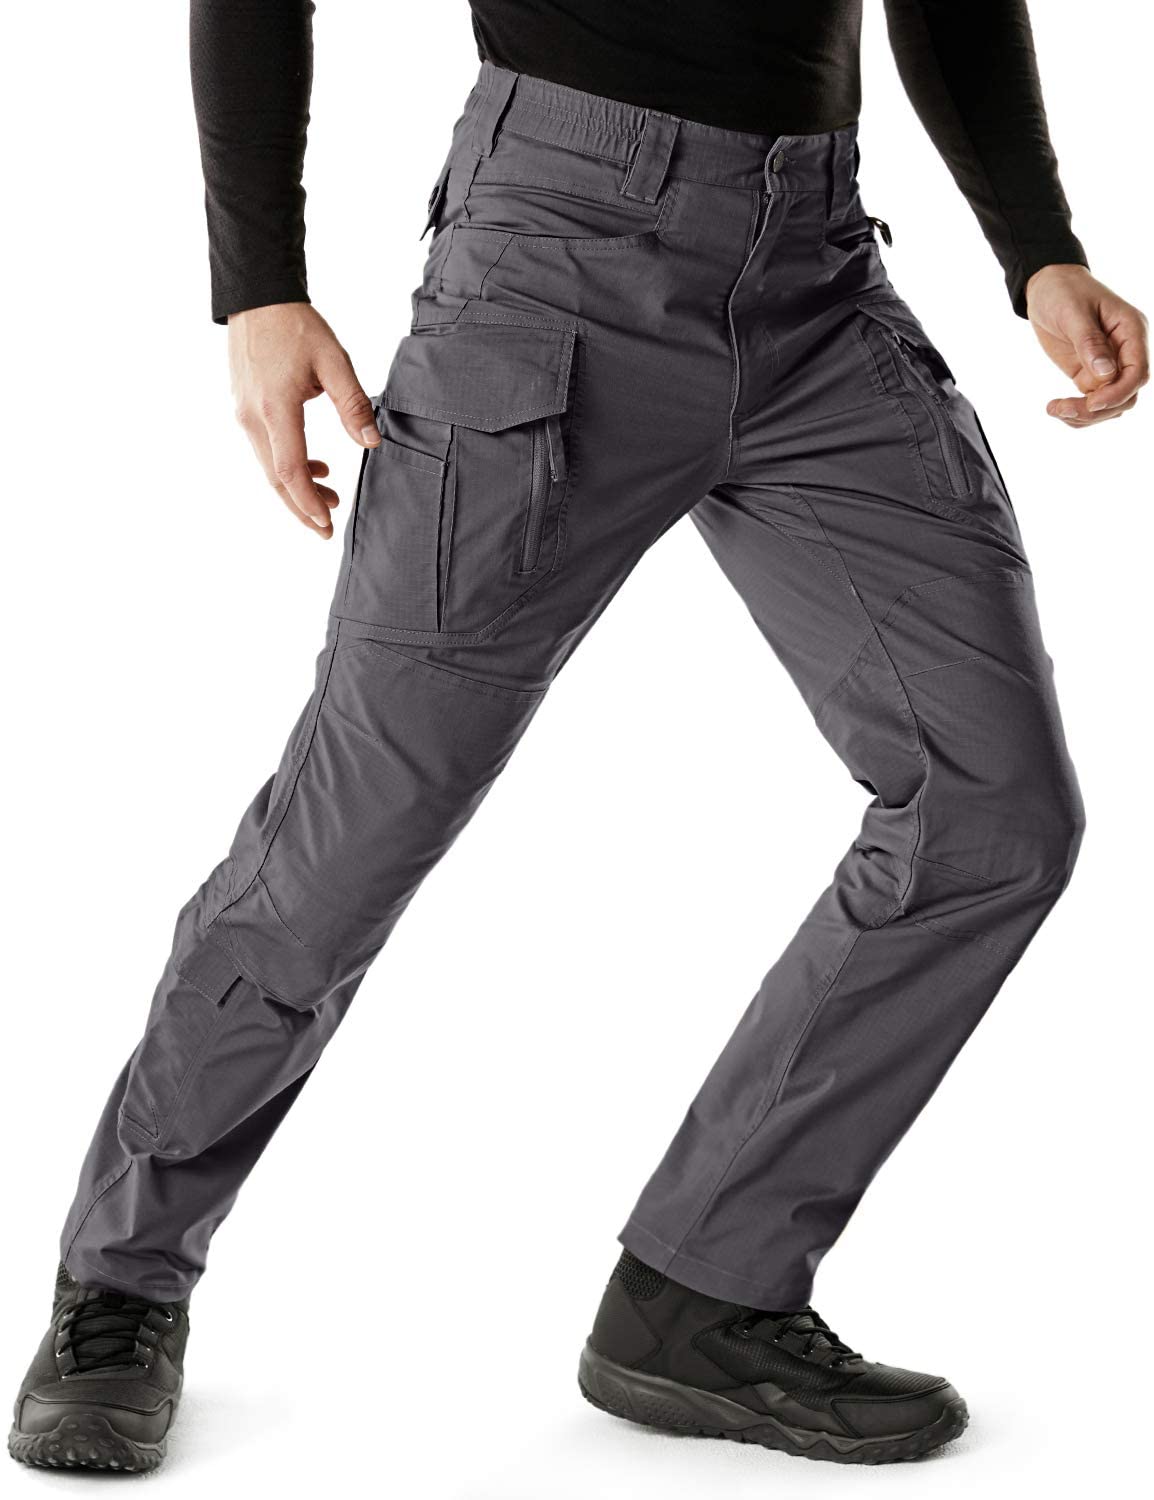 Lightweight EDC Outdoor Hiking Work Pants Water Repellent Ripstop Cargo Pants CQR Mens Flex Stretch Tactical Pants 